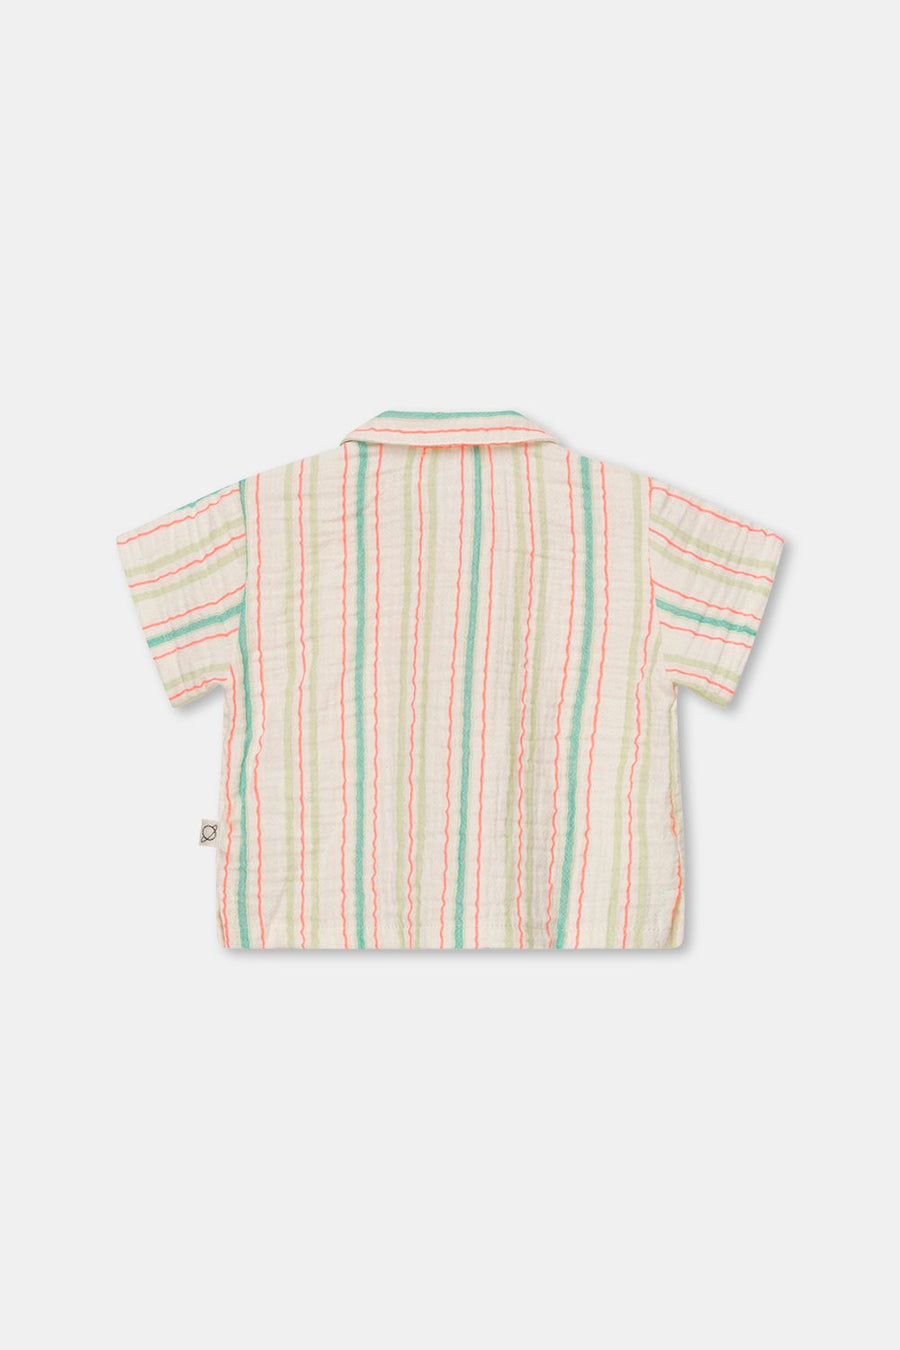 My Little cozmo - LOUIS218 - stripe shirt